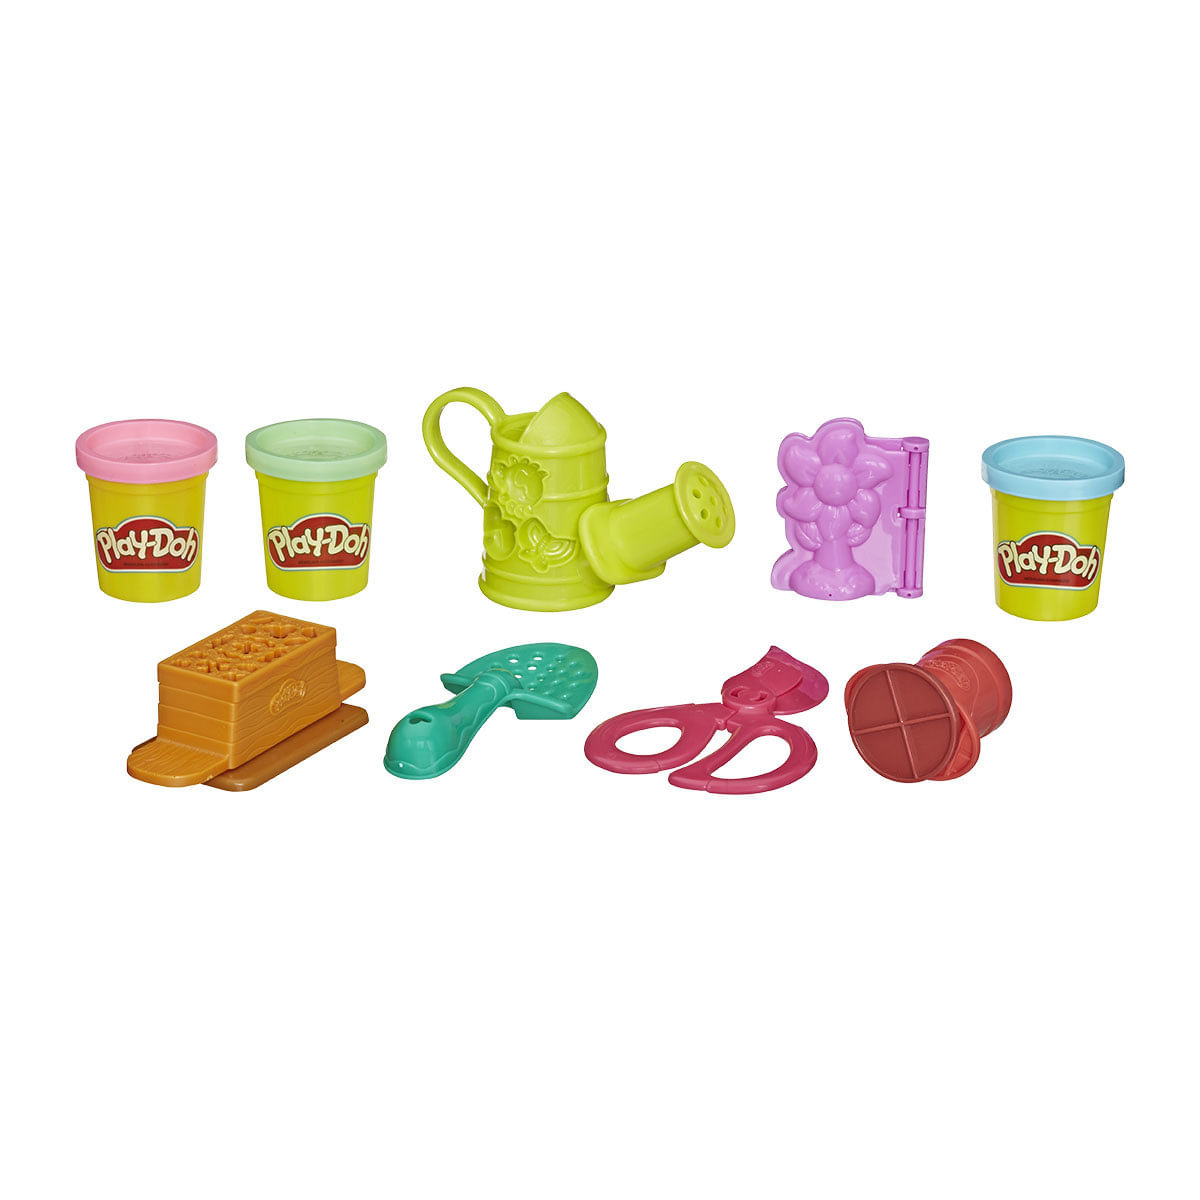 5670799_Play-Doh-Kit-de-Jardinagem-Hasbro-408-Gramas_1_Zoom